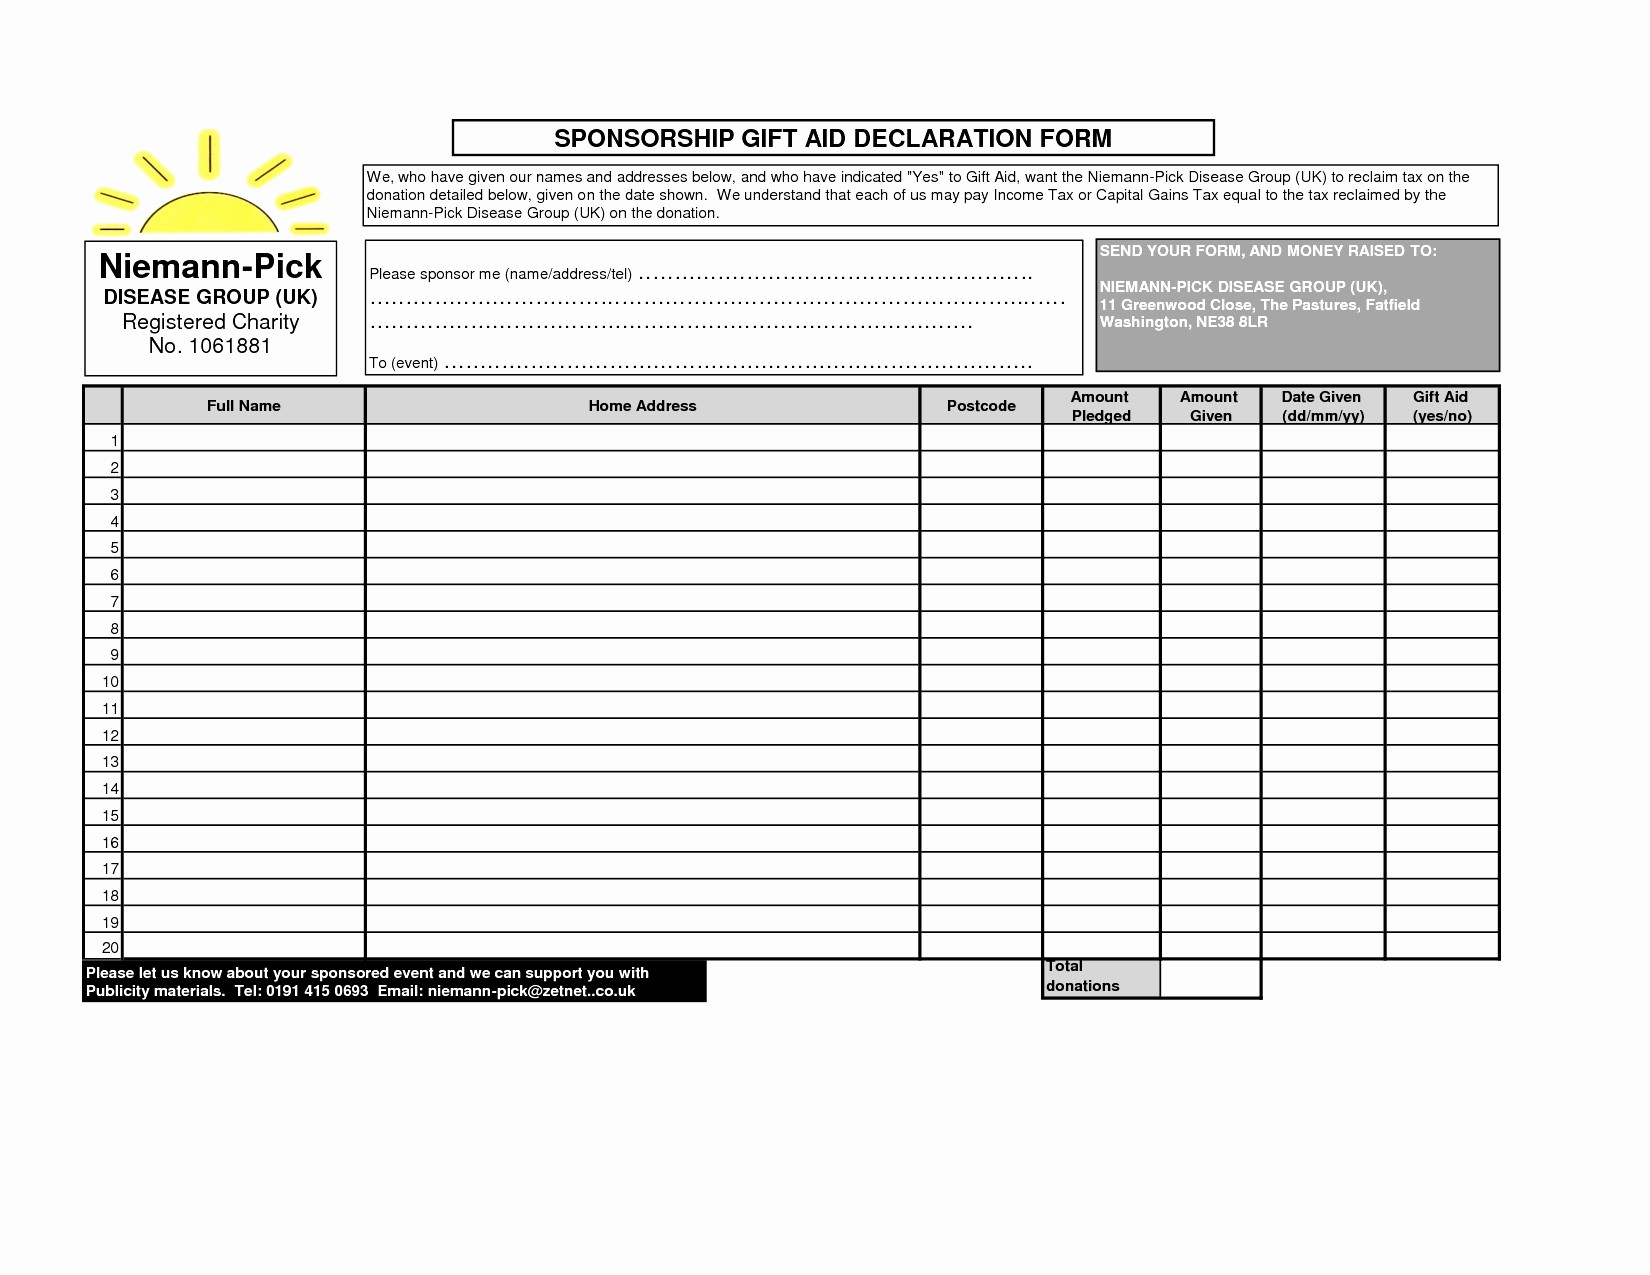 Lularoe Spreadsheet Free Inspirational Spreadsheets For Document